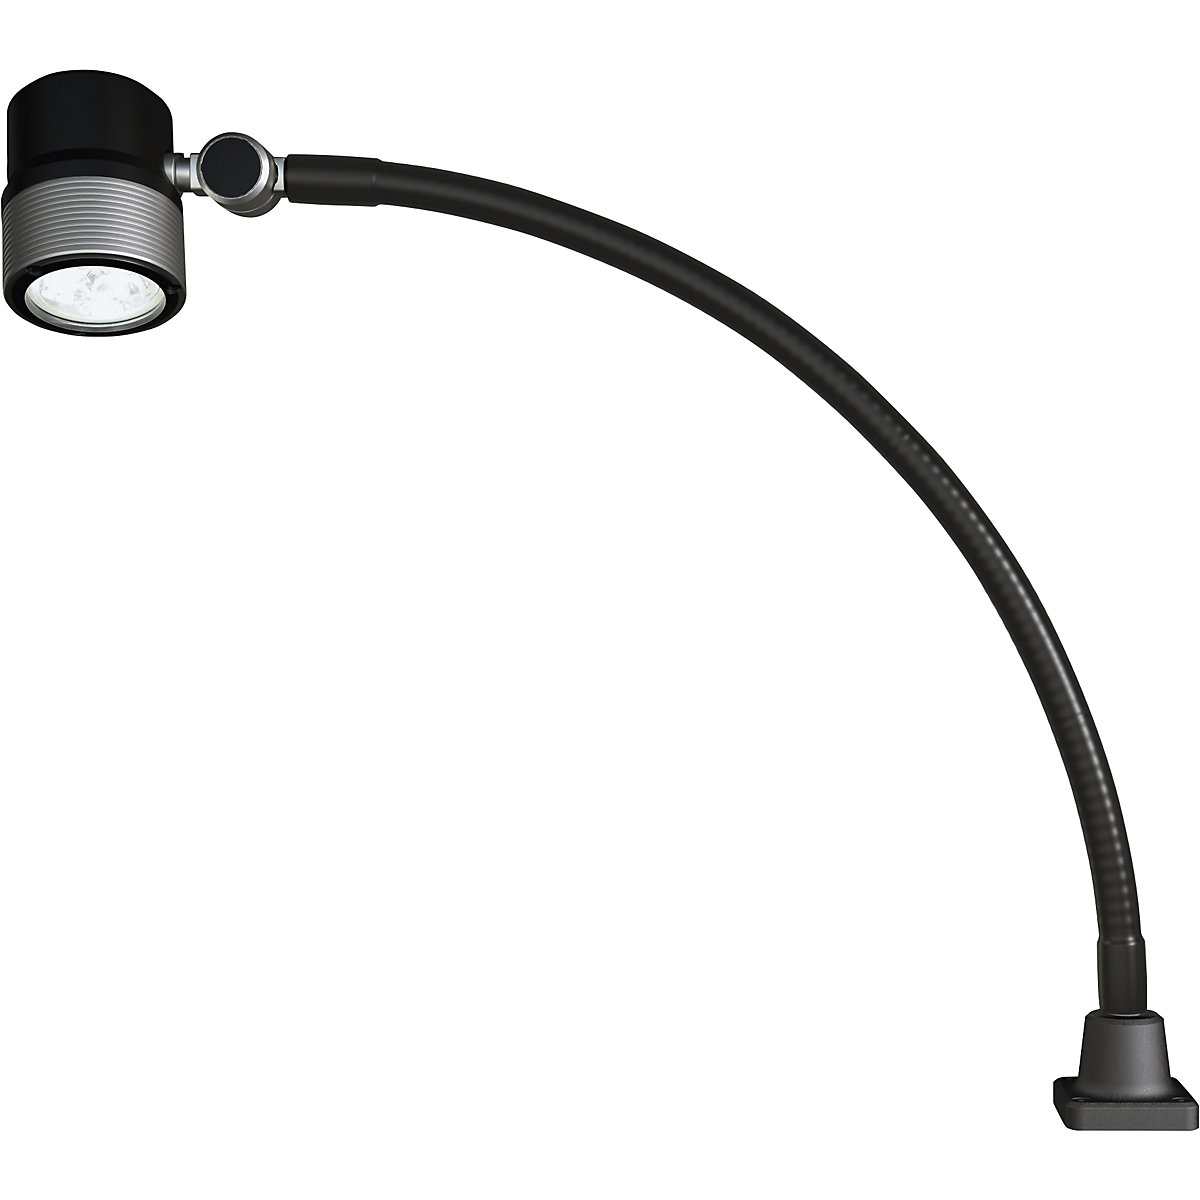 LED-machinelamp met flexibele arm – Waldmann